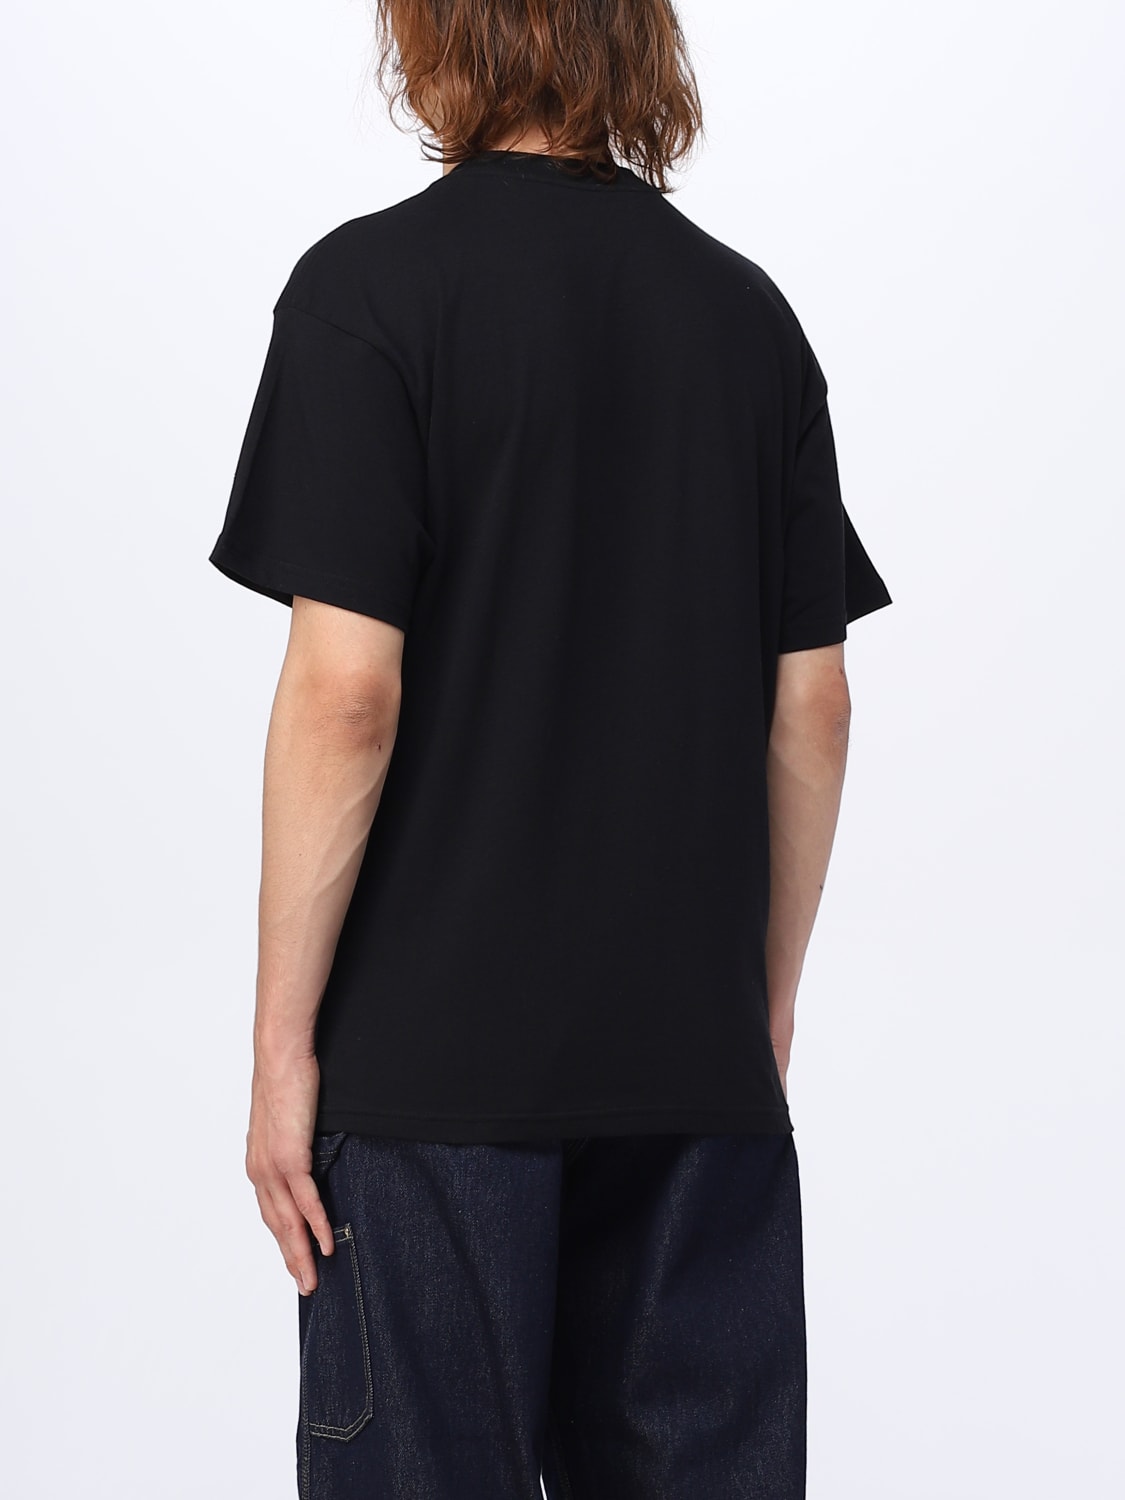 Carhartt WIP Love T-Shirt S / Black / Black